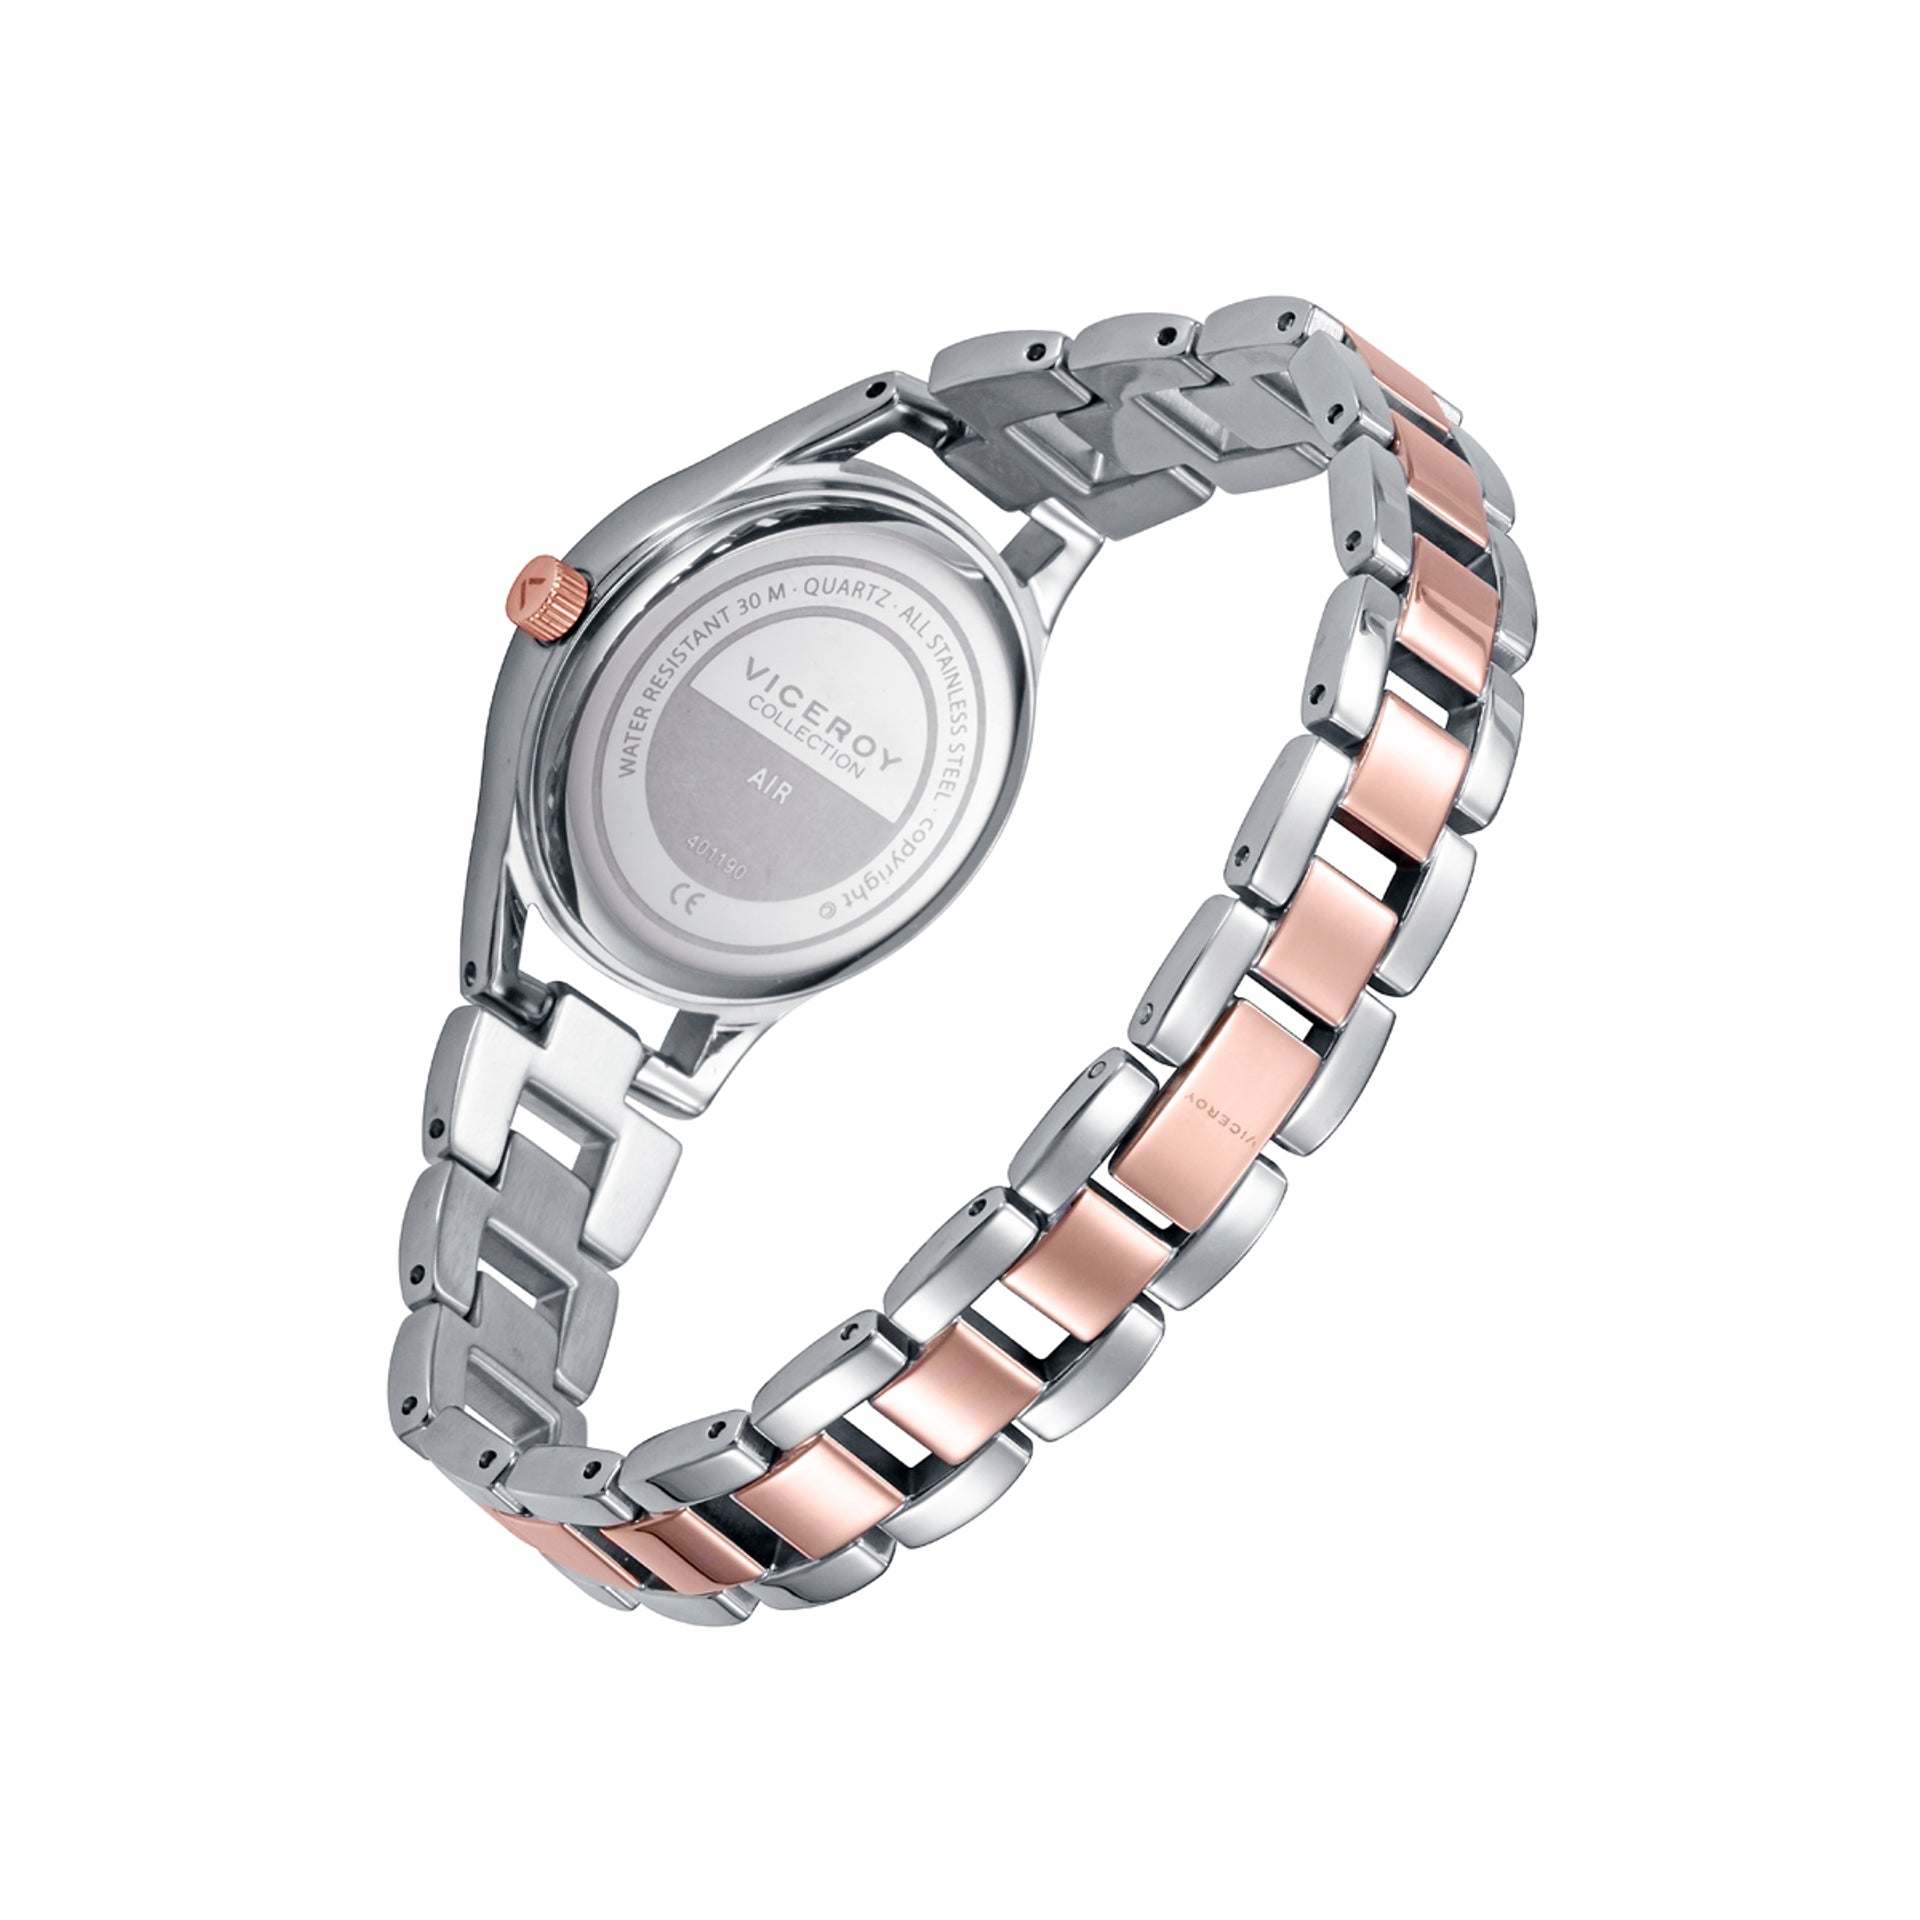 Reloj Viceroy mujer ip rosa 401090-35